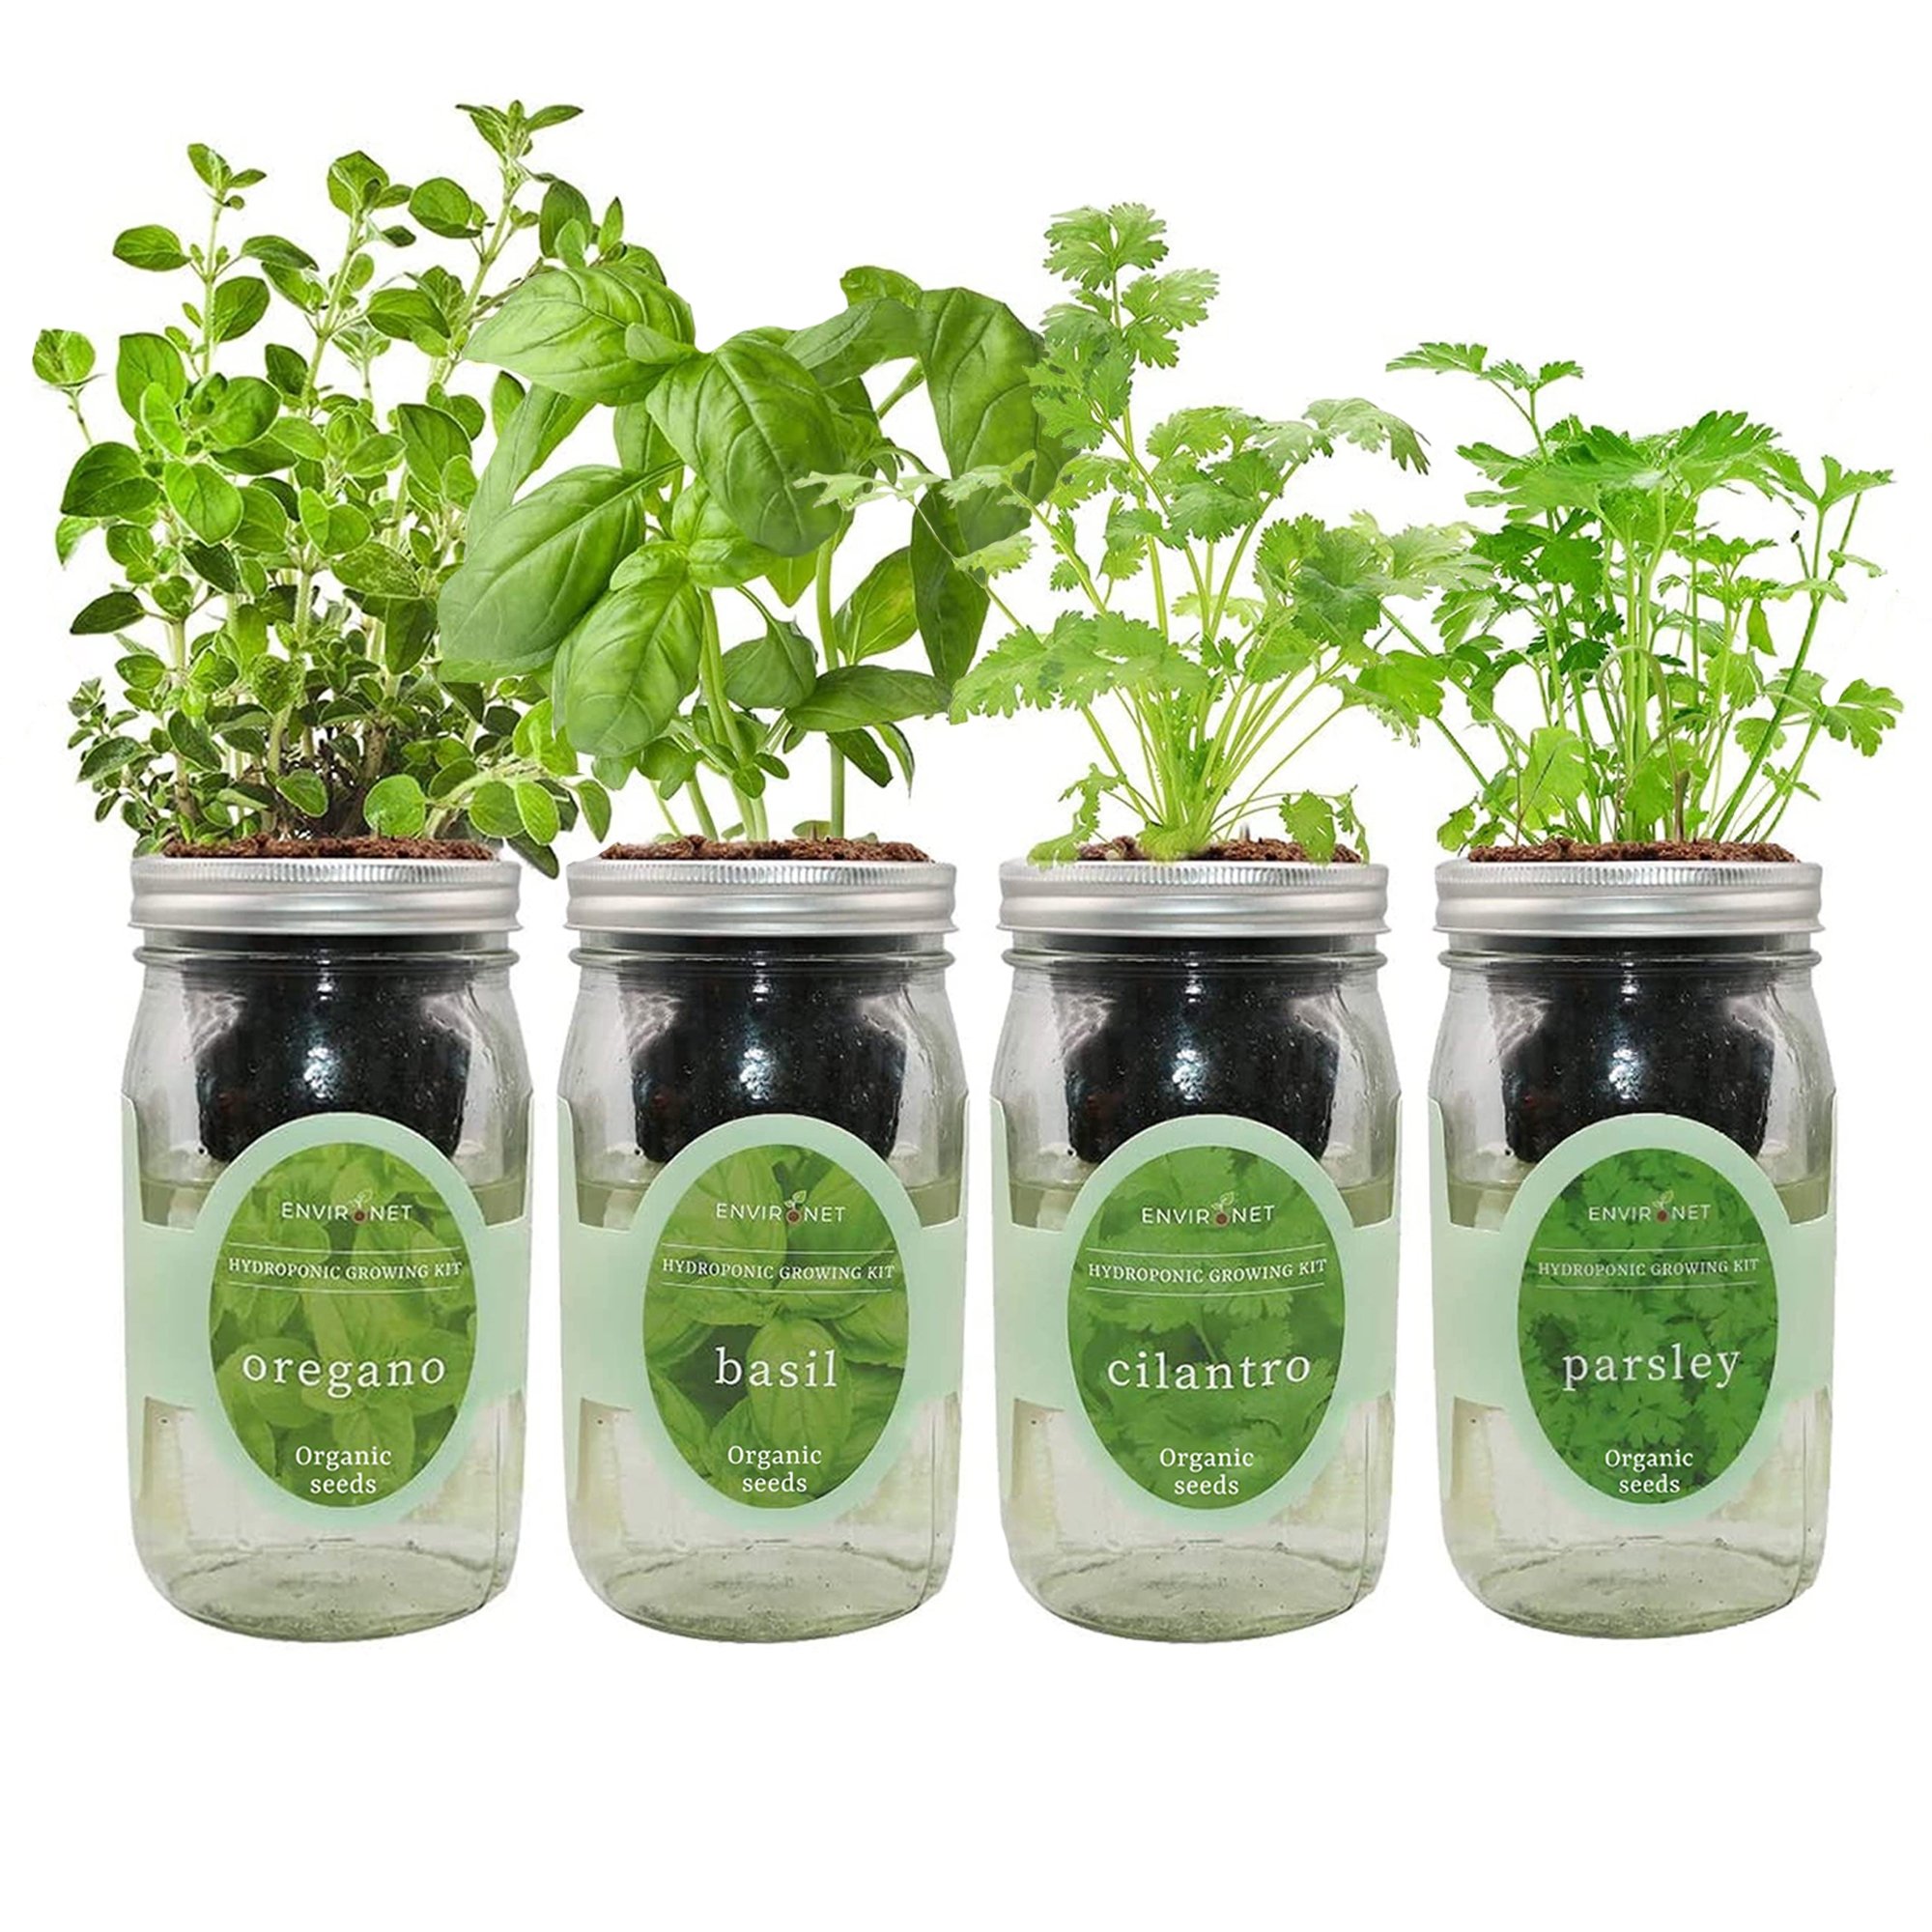 Hydroponic Herb Growing Garden Bundle with Organic Seeds- Cilantro,Basil,Parsley, Oregano